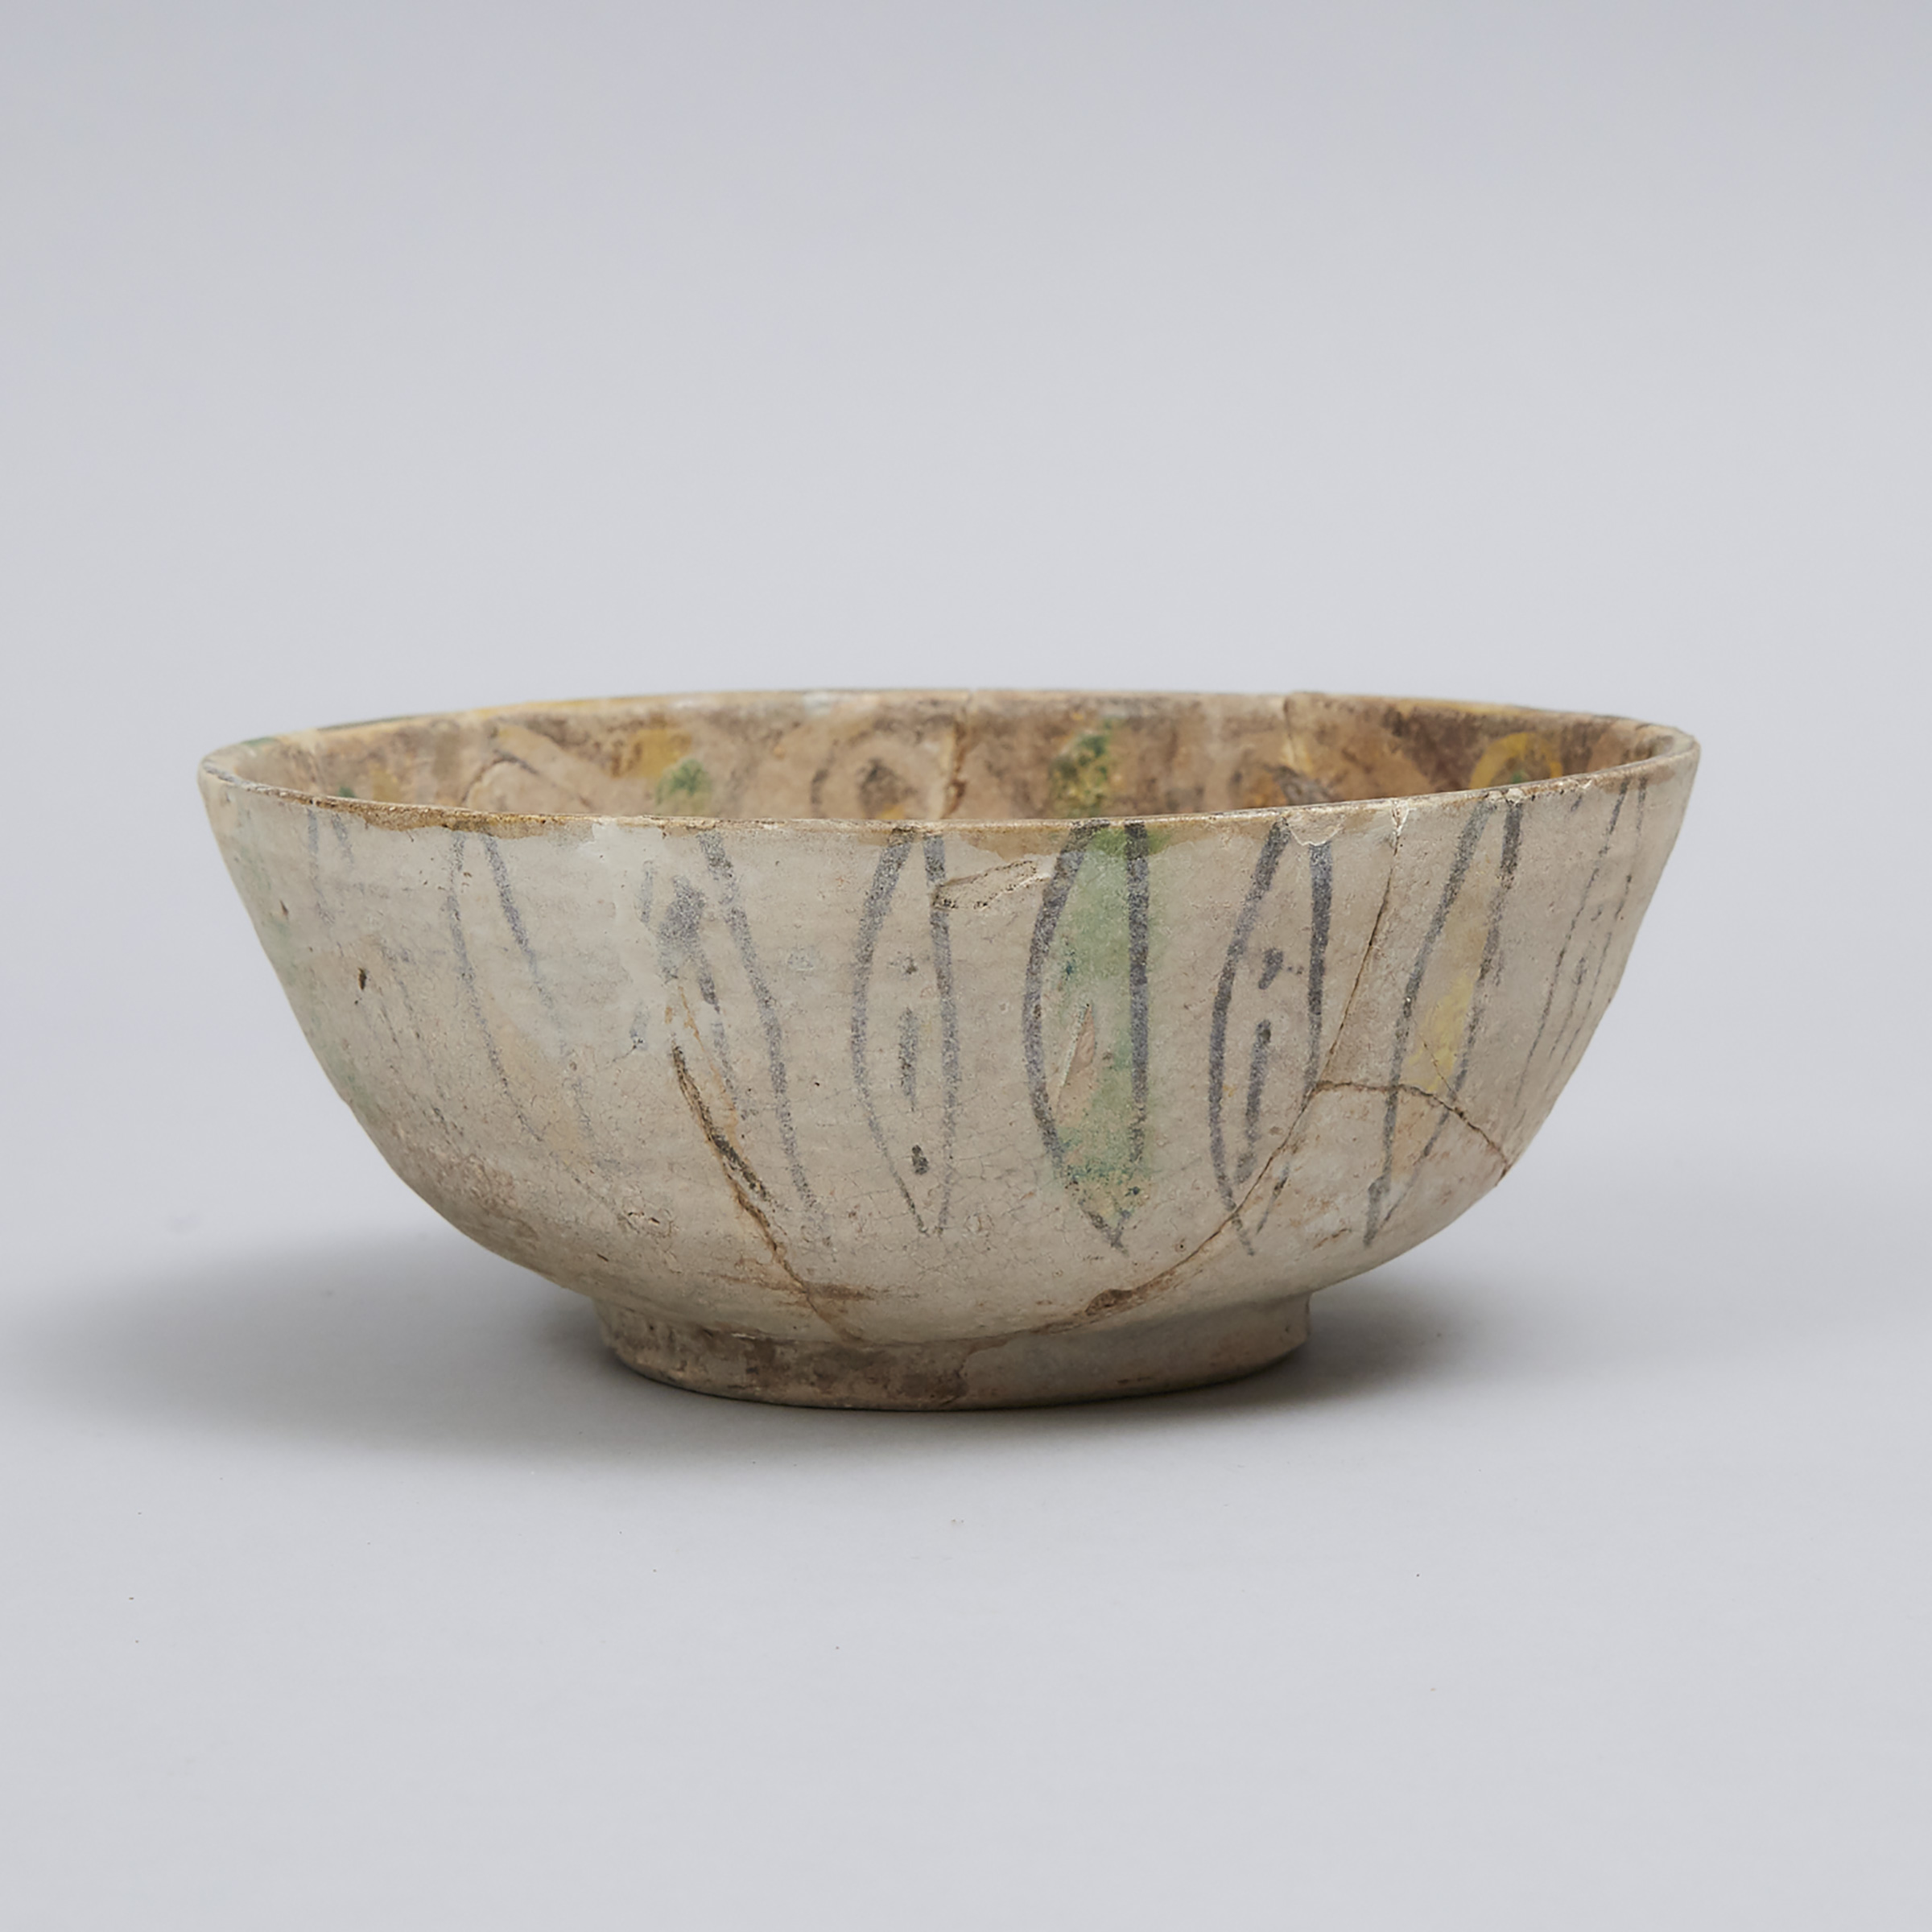 Nishapur Buffware Pottery Bowl, Persia, 11th/12th century